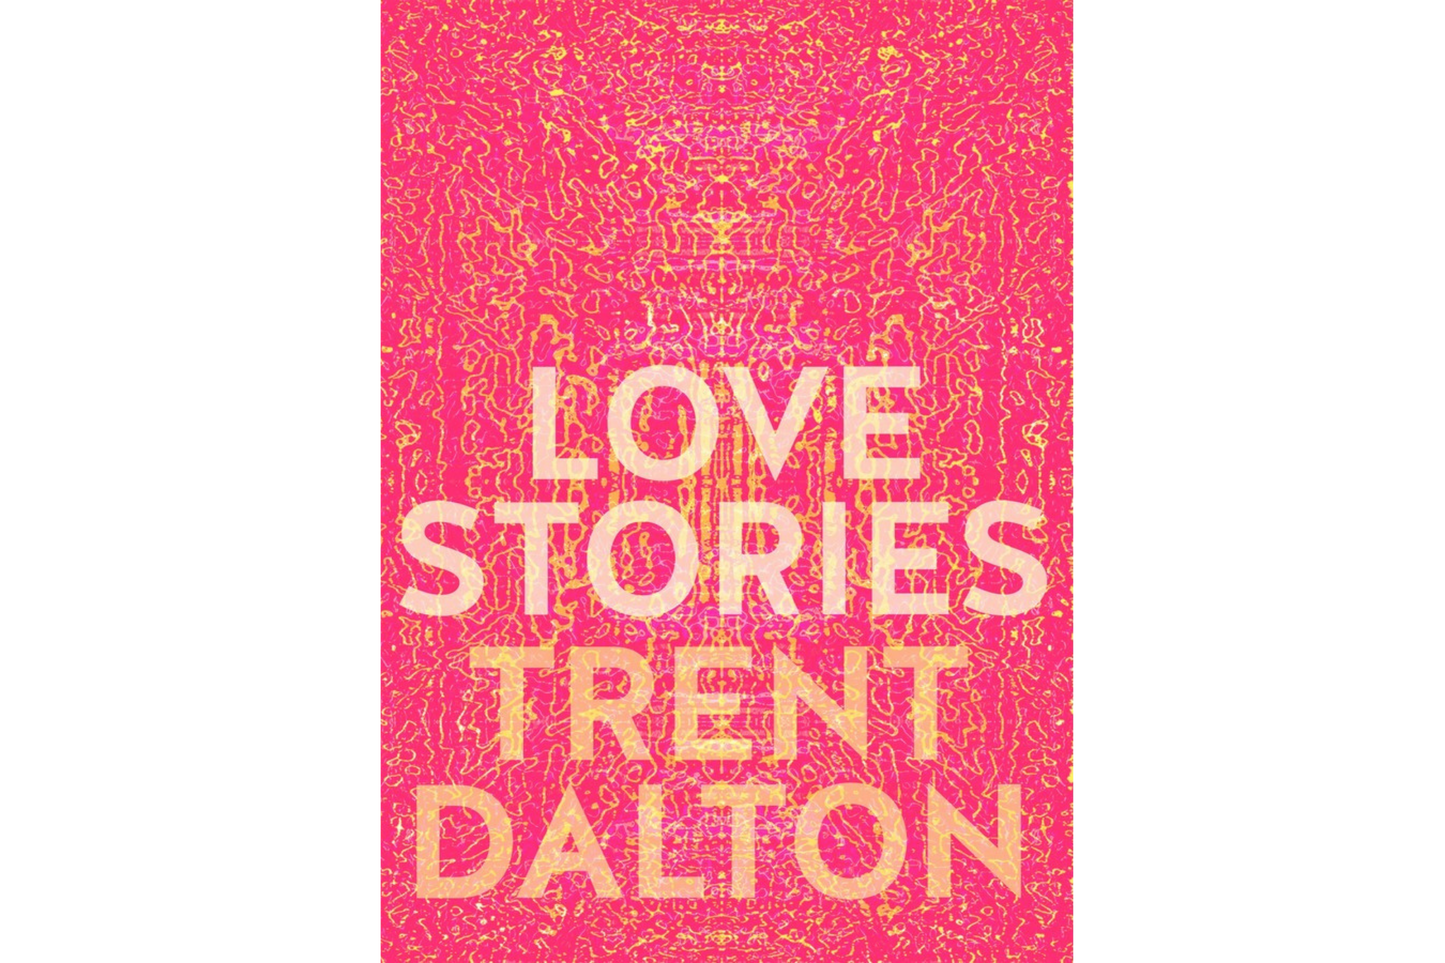 Love Stories (Trent Dalton)